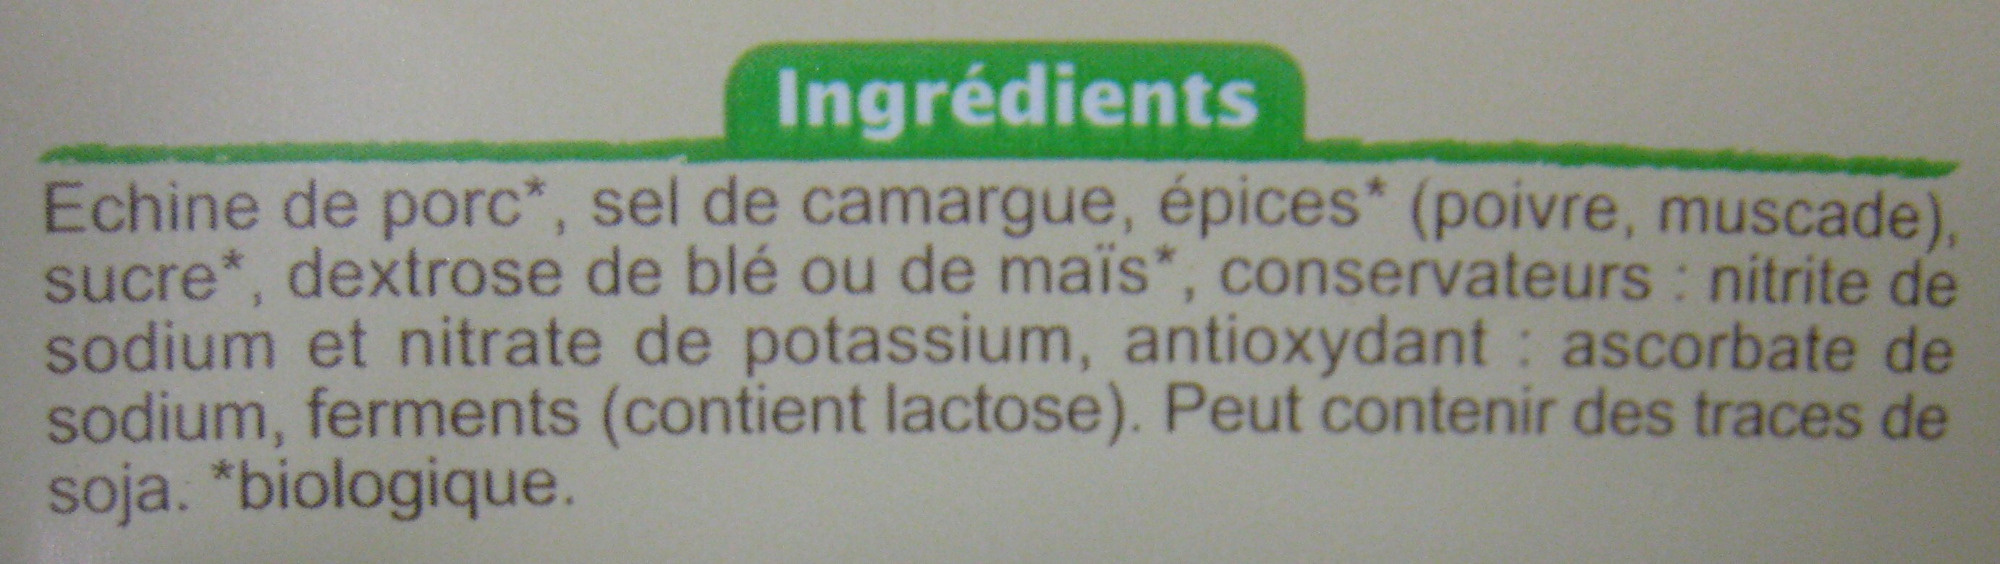 Coppa Bio - Ingredients - fr